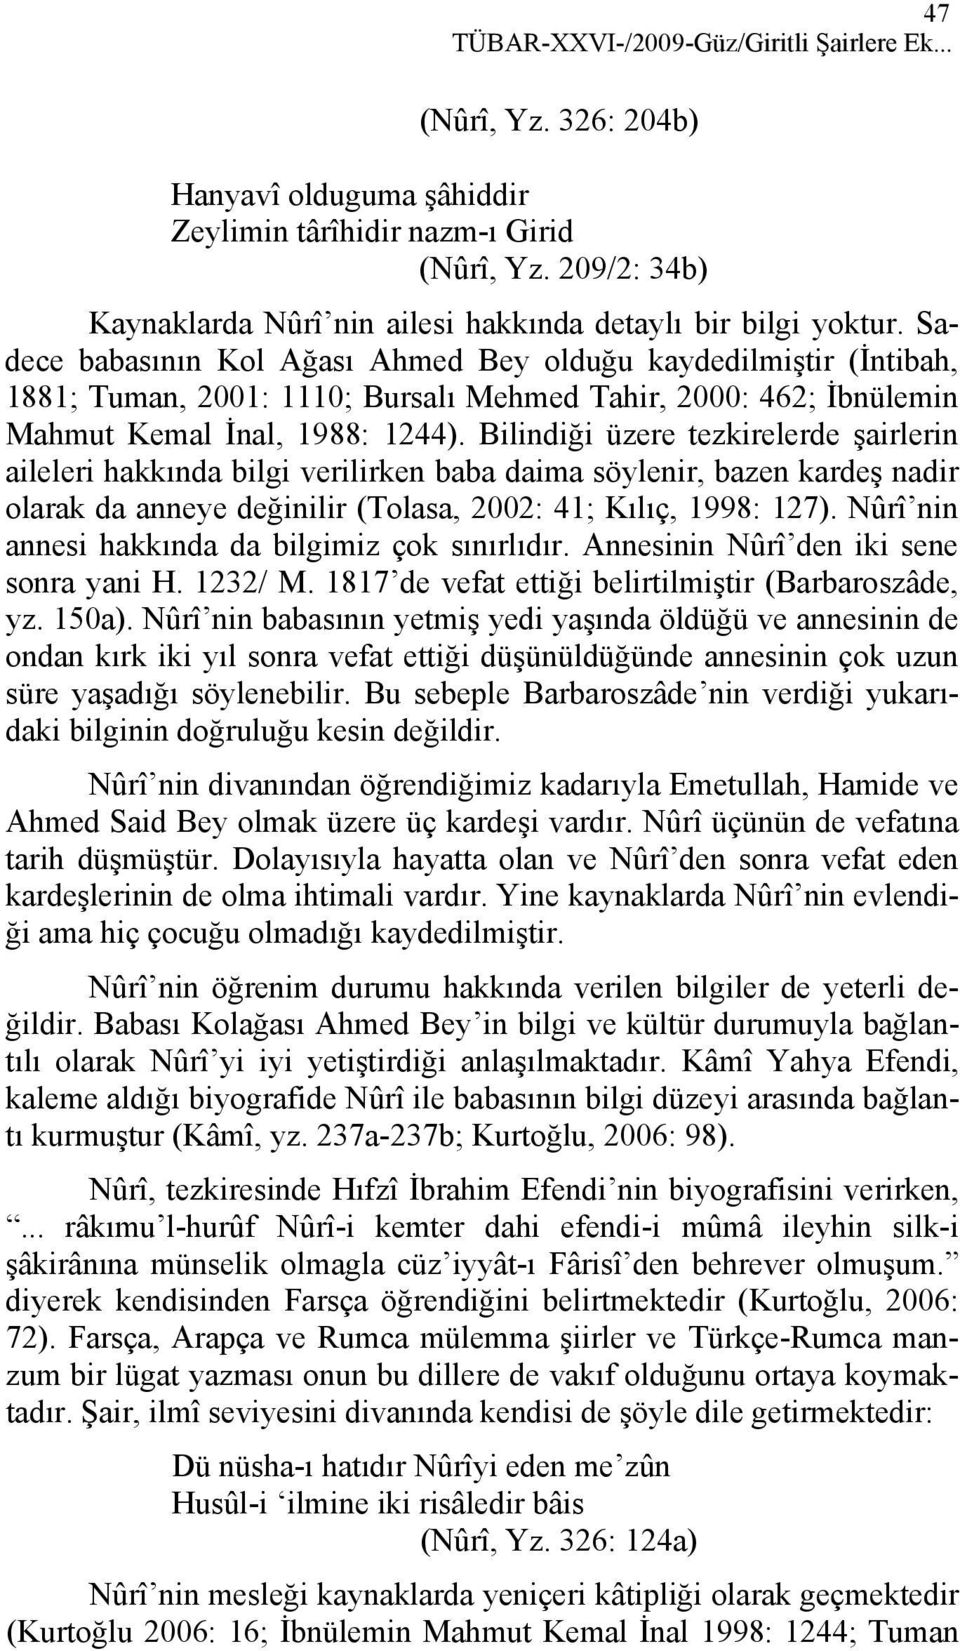 Sadece babasının Kol Ağası Ahmed Bey olduğu kaydedilmiştir (İntibah, 1881; Tuman, 2001: 1110; Bursalı Mehmed Tahir, 2000: 462; İbnülemin Mahmut Kemal İnal, 1988: 1244).